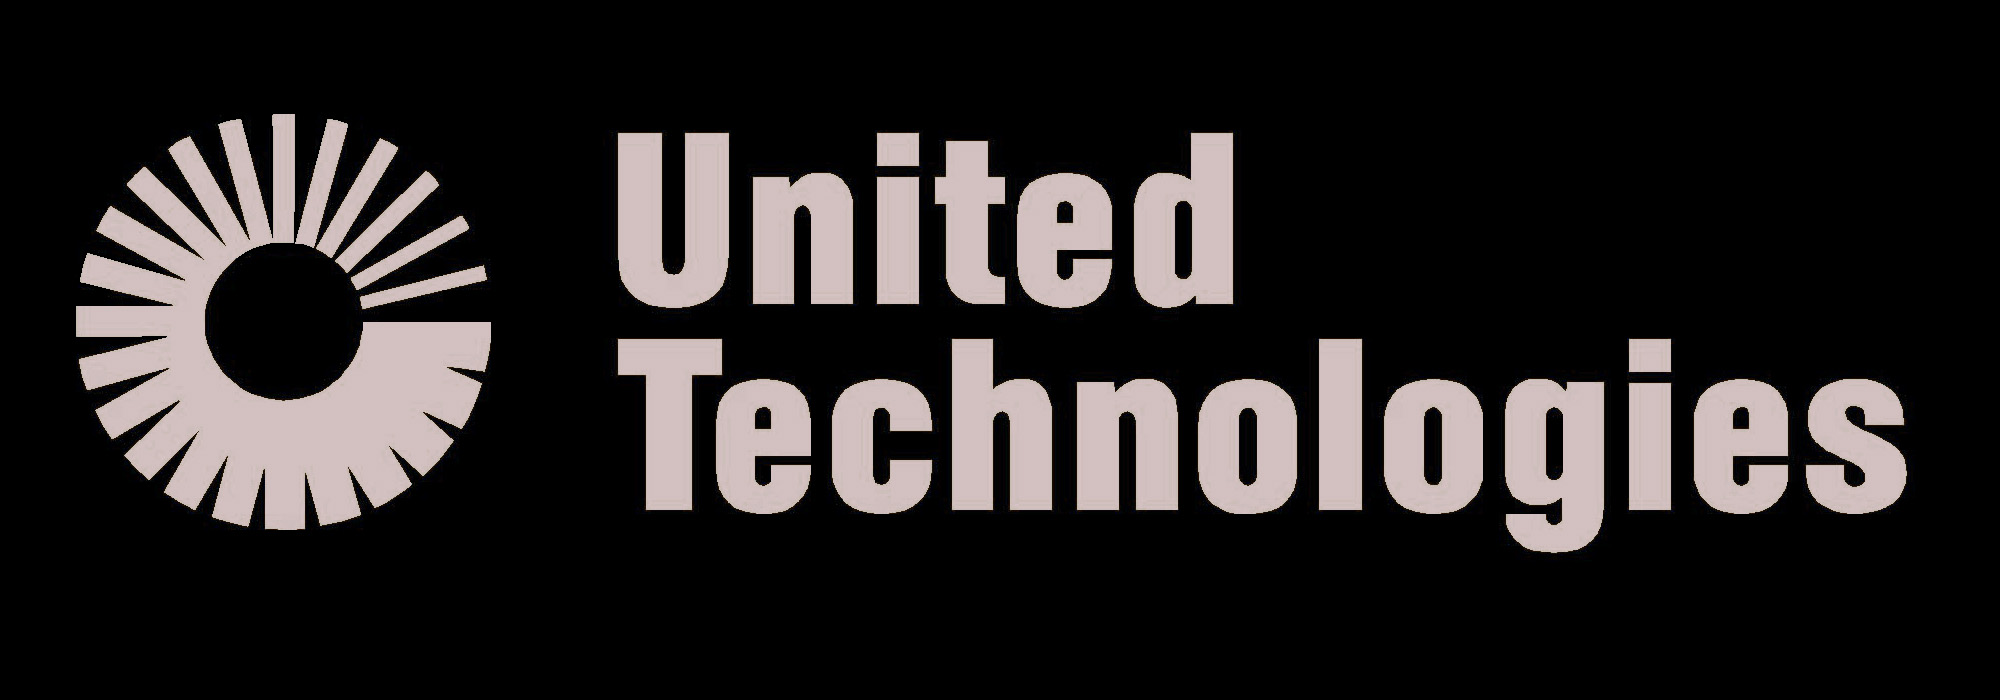 United Technologies Logo 03